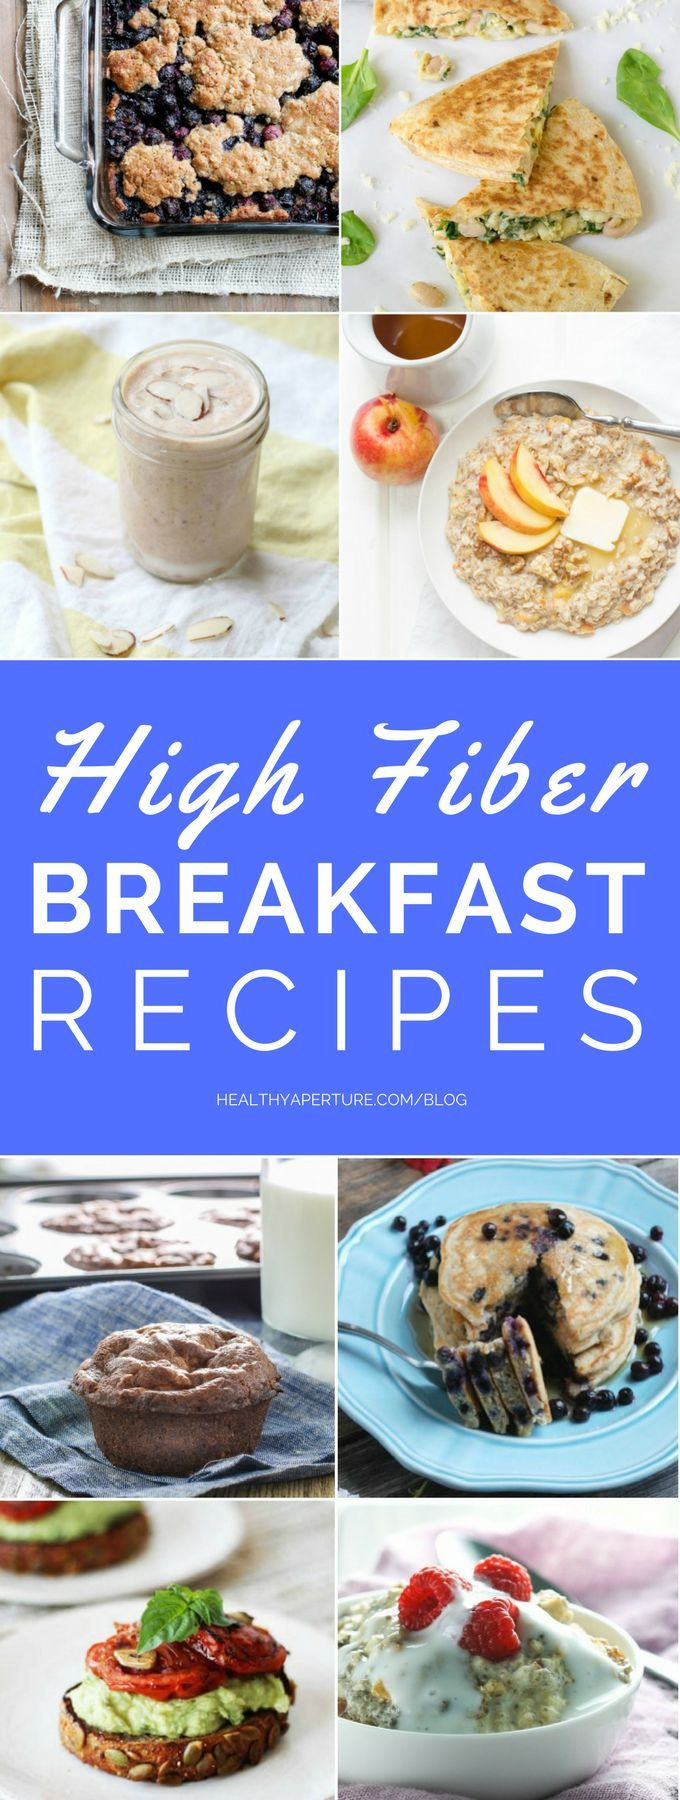 High Fiber Recipes For Dinner
 Best 25 High fiber foods ideas on Pinterest